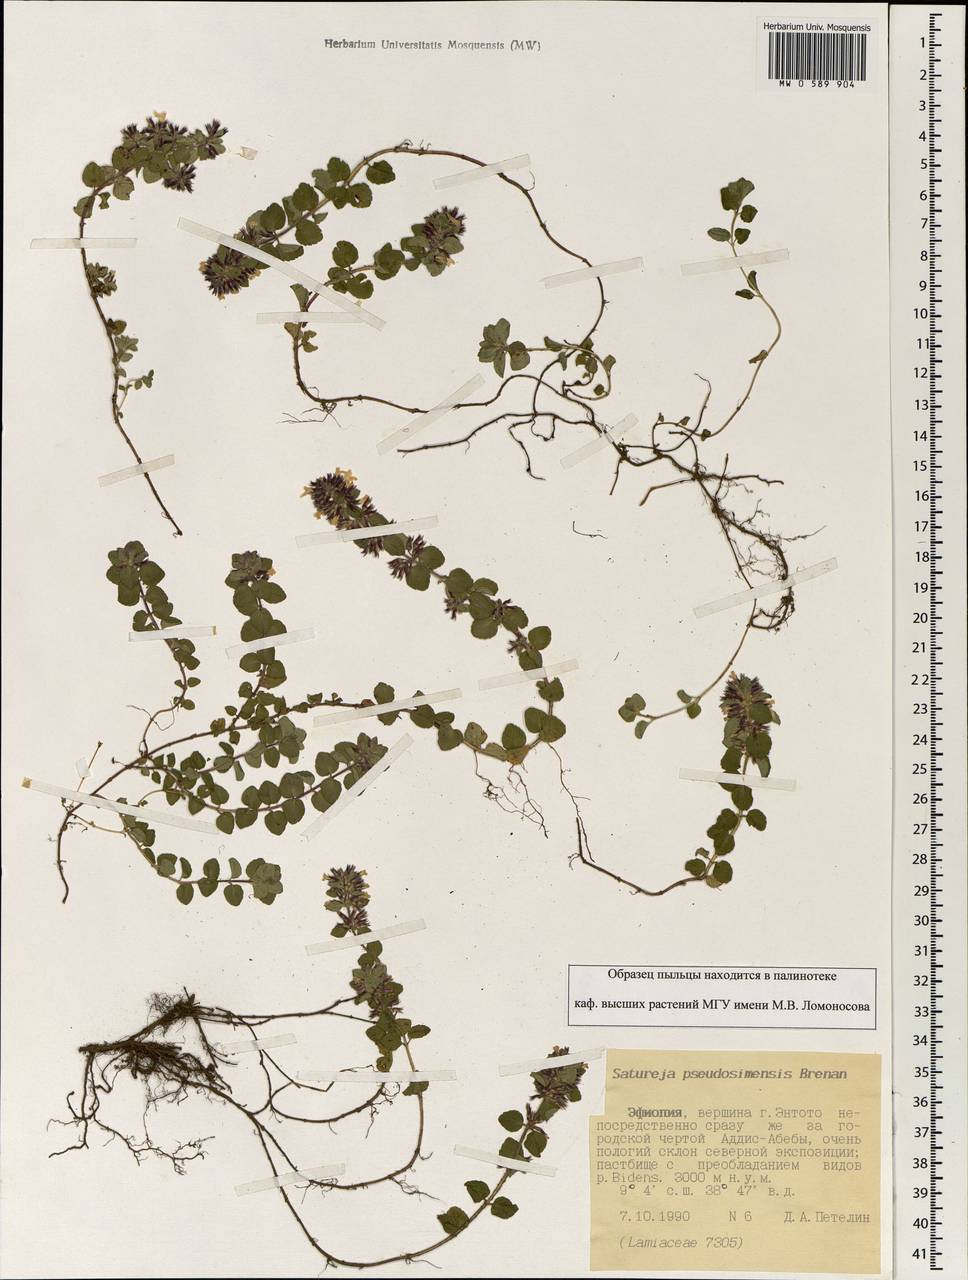 Clinopodium uhligii var. obtusifolium (Avetta) Ryding, Africa (AFR) (Ethiopia)